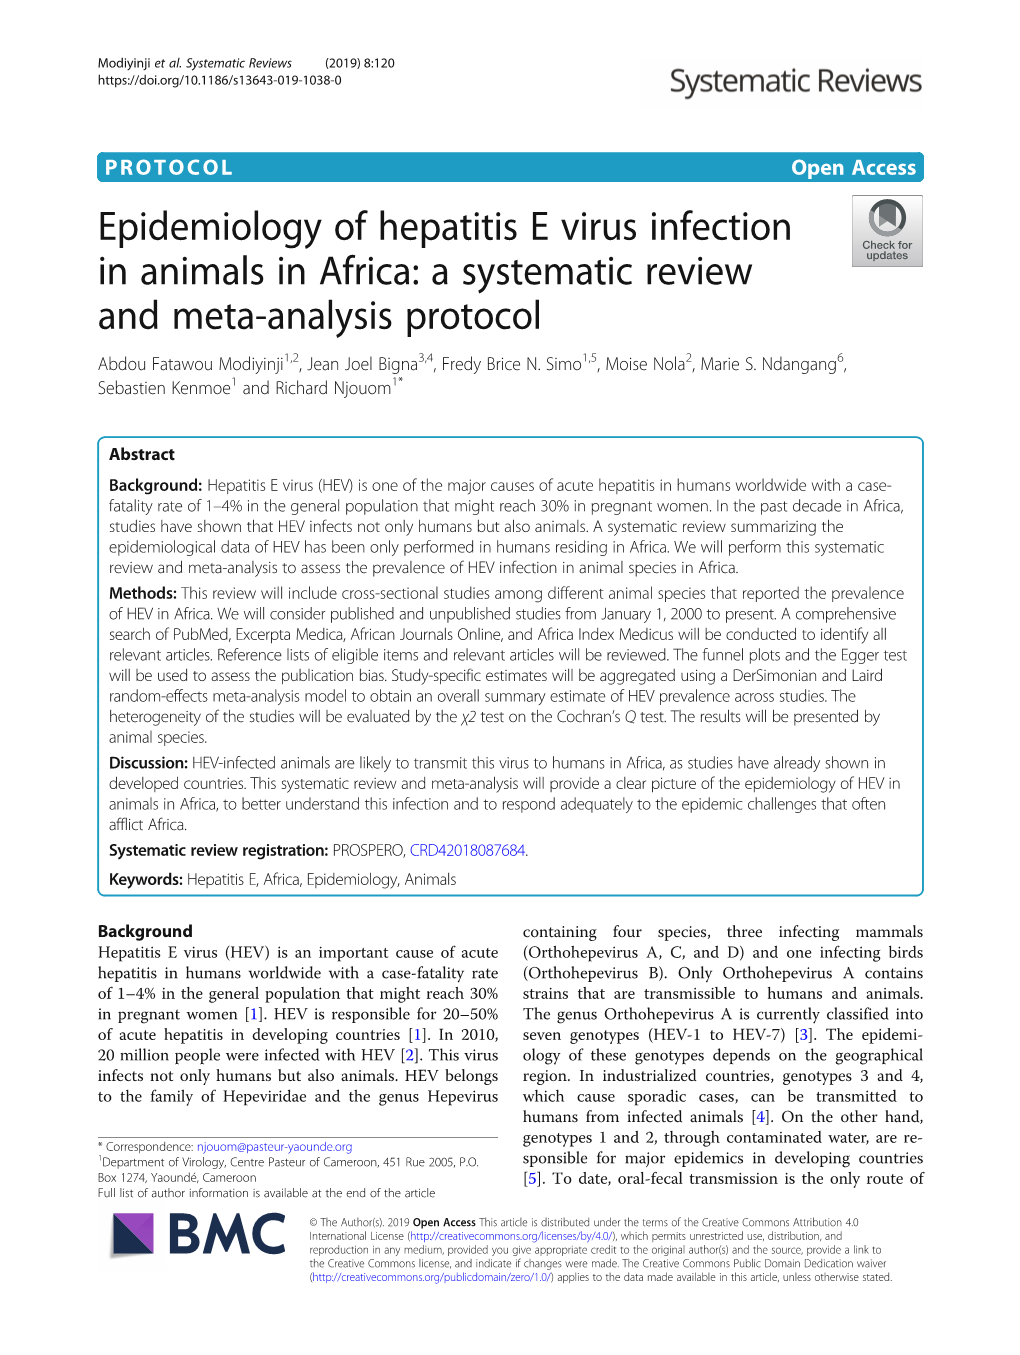 Epidemiology of Hepatitis E Virus Infection in Animals in Africa